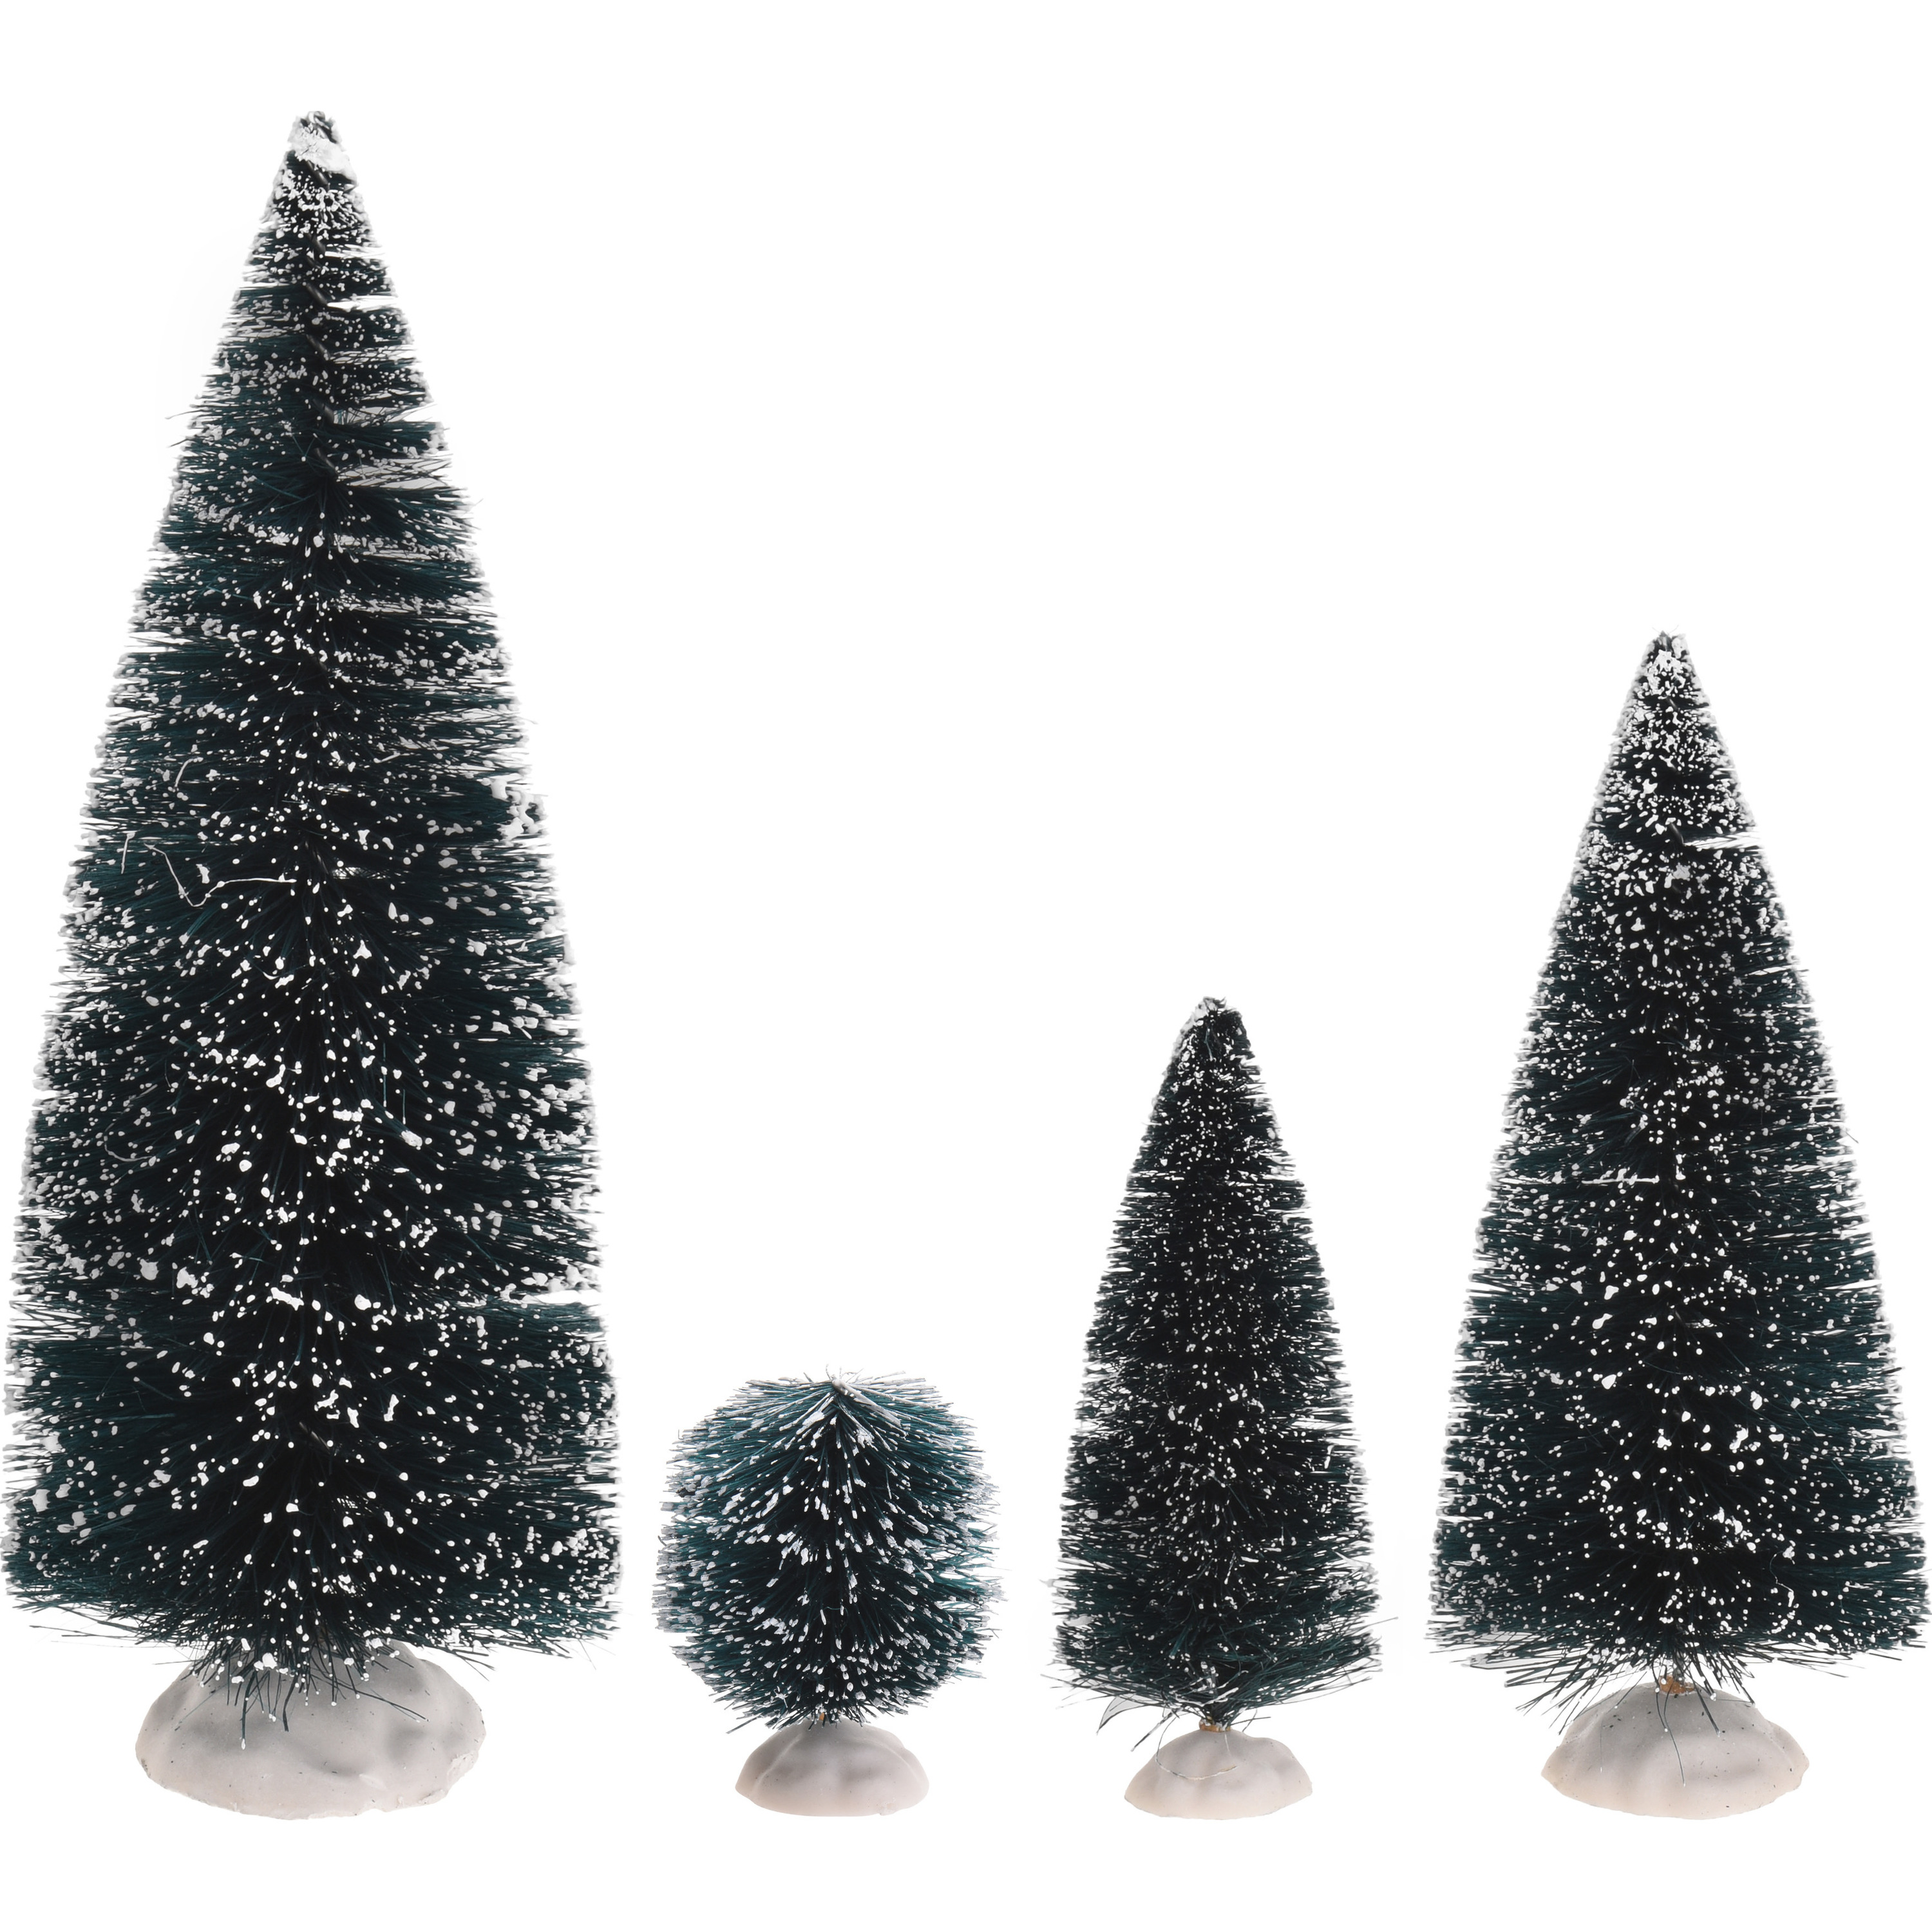 Kerstdorp onderdelen 9x decoratie dennenbomen-kerstbomen besneeuwd